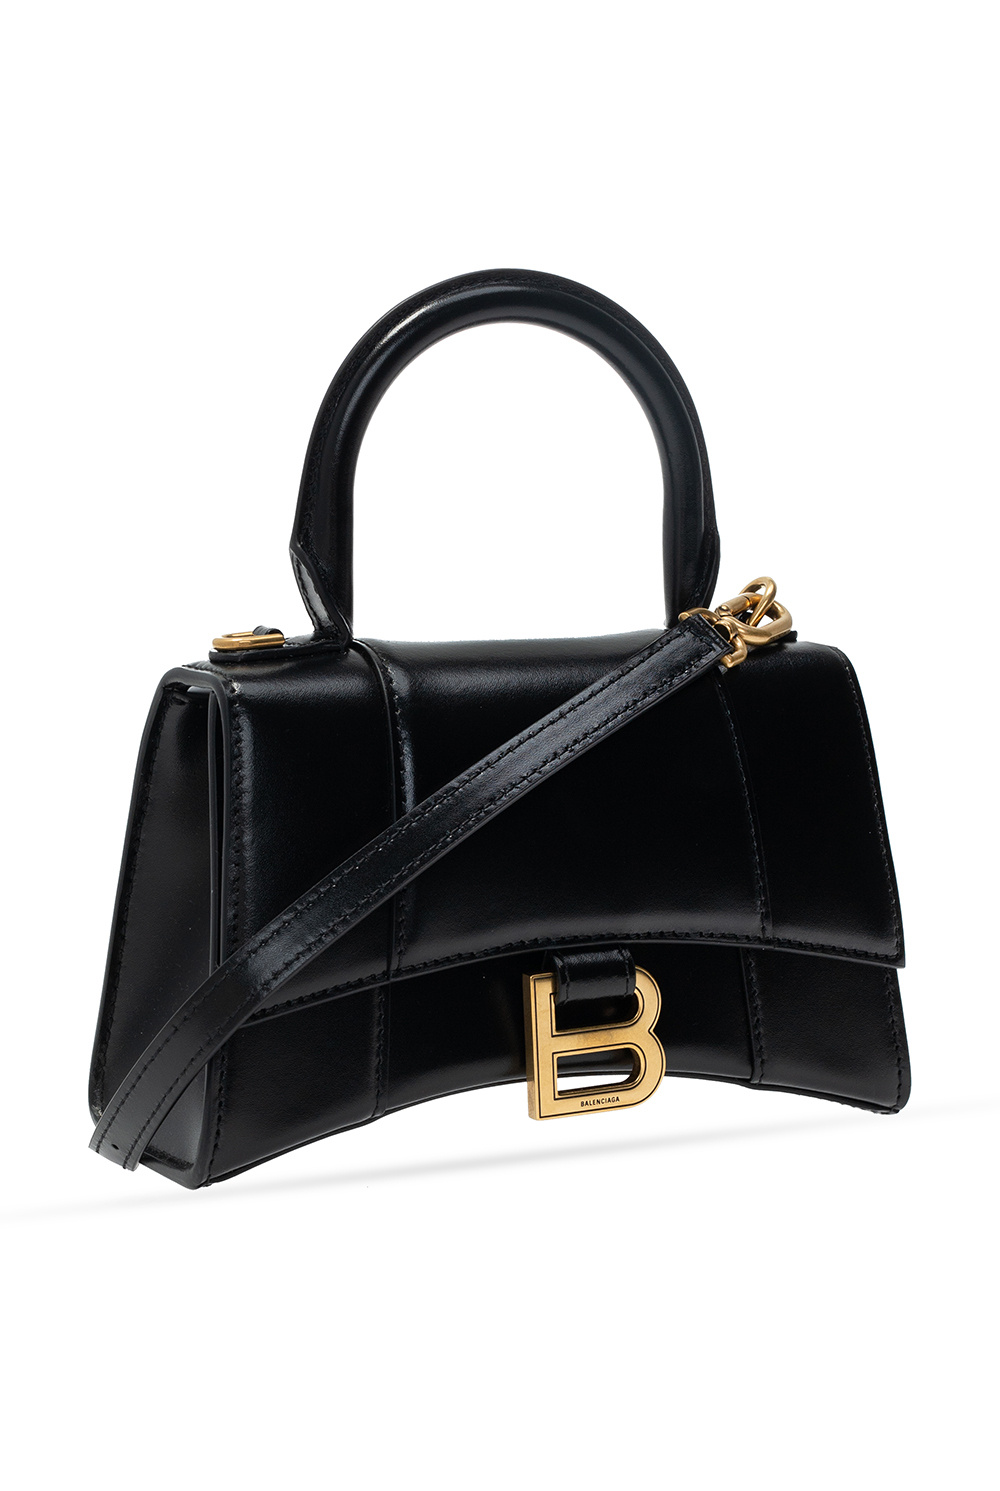 Balenciaga Hourglass Small Top Handle Bag Rosa in Calfskin Leather